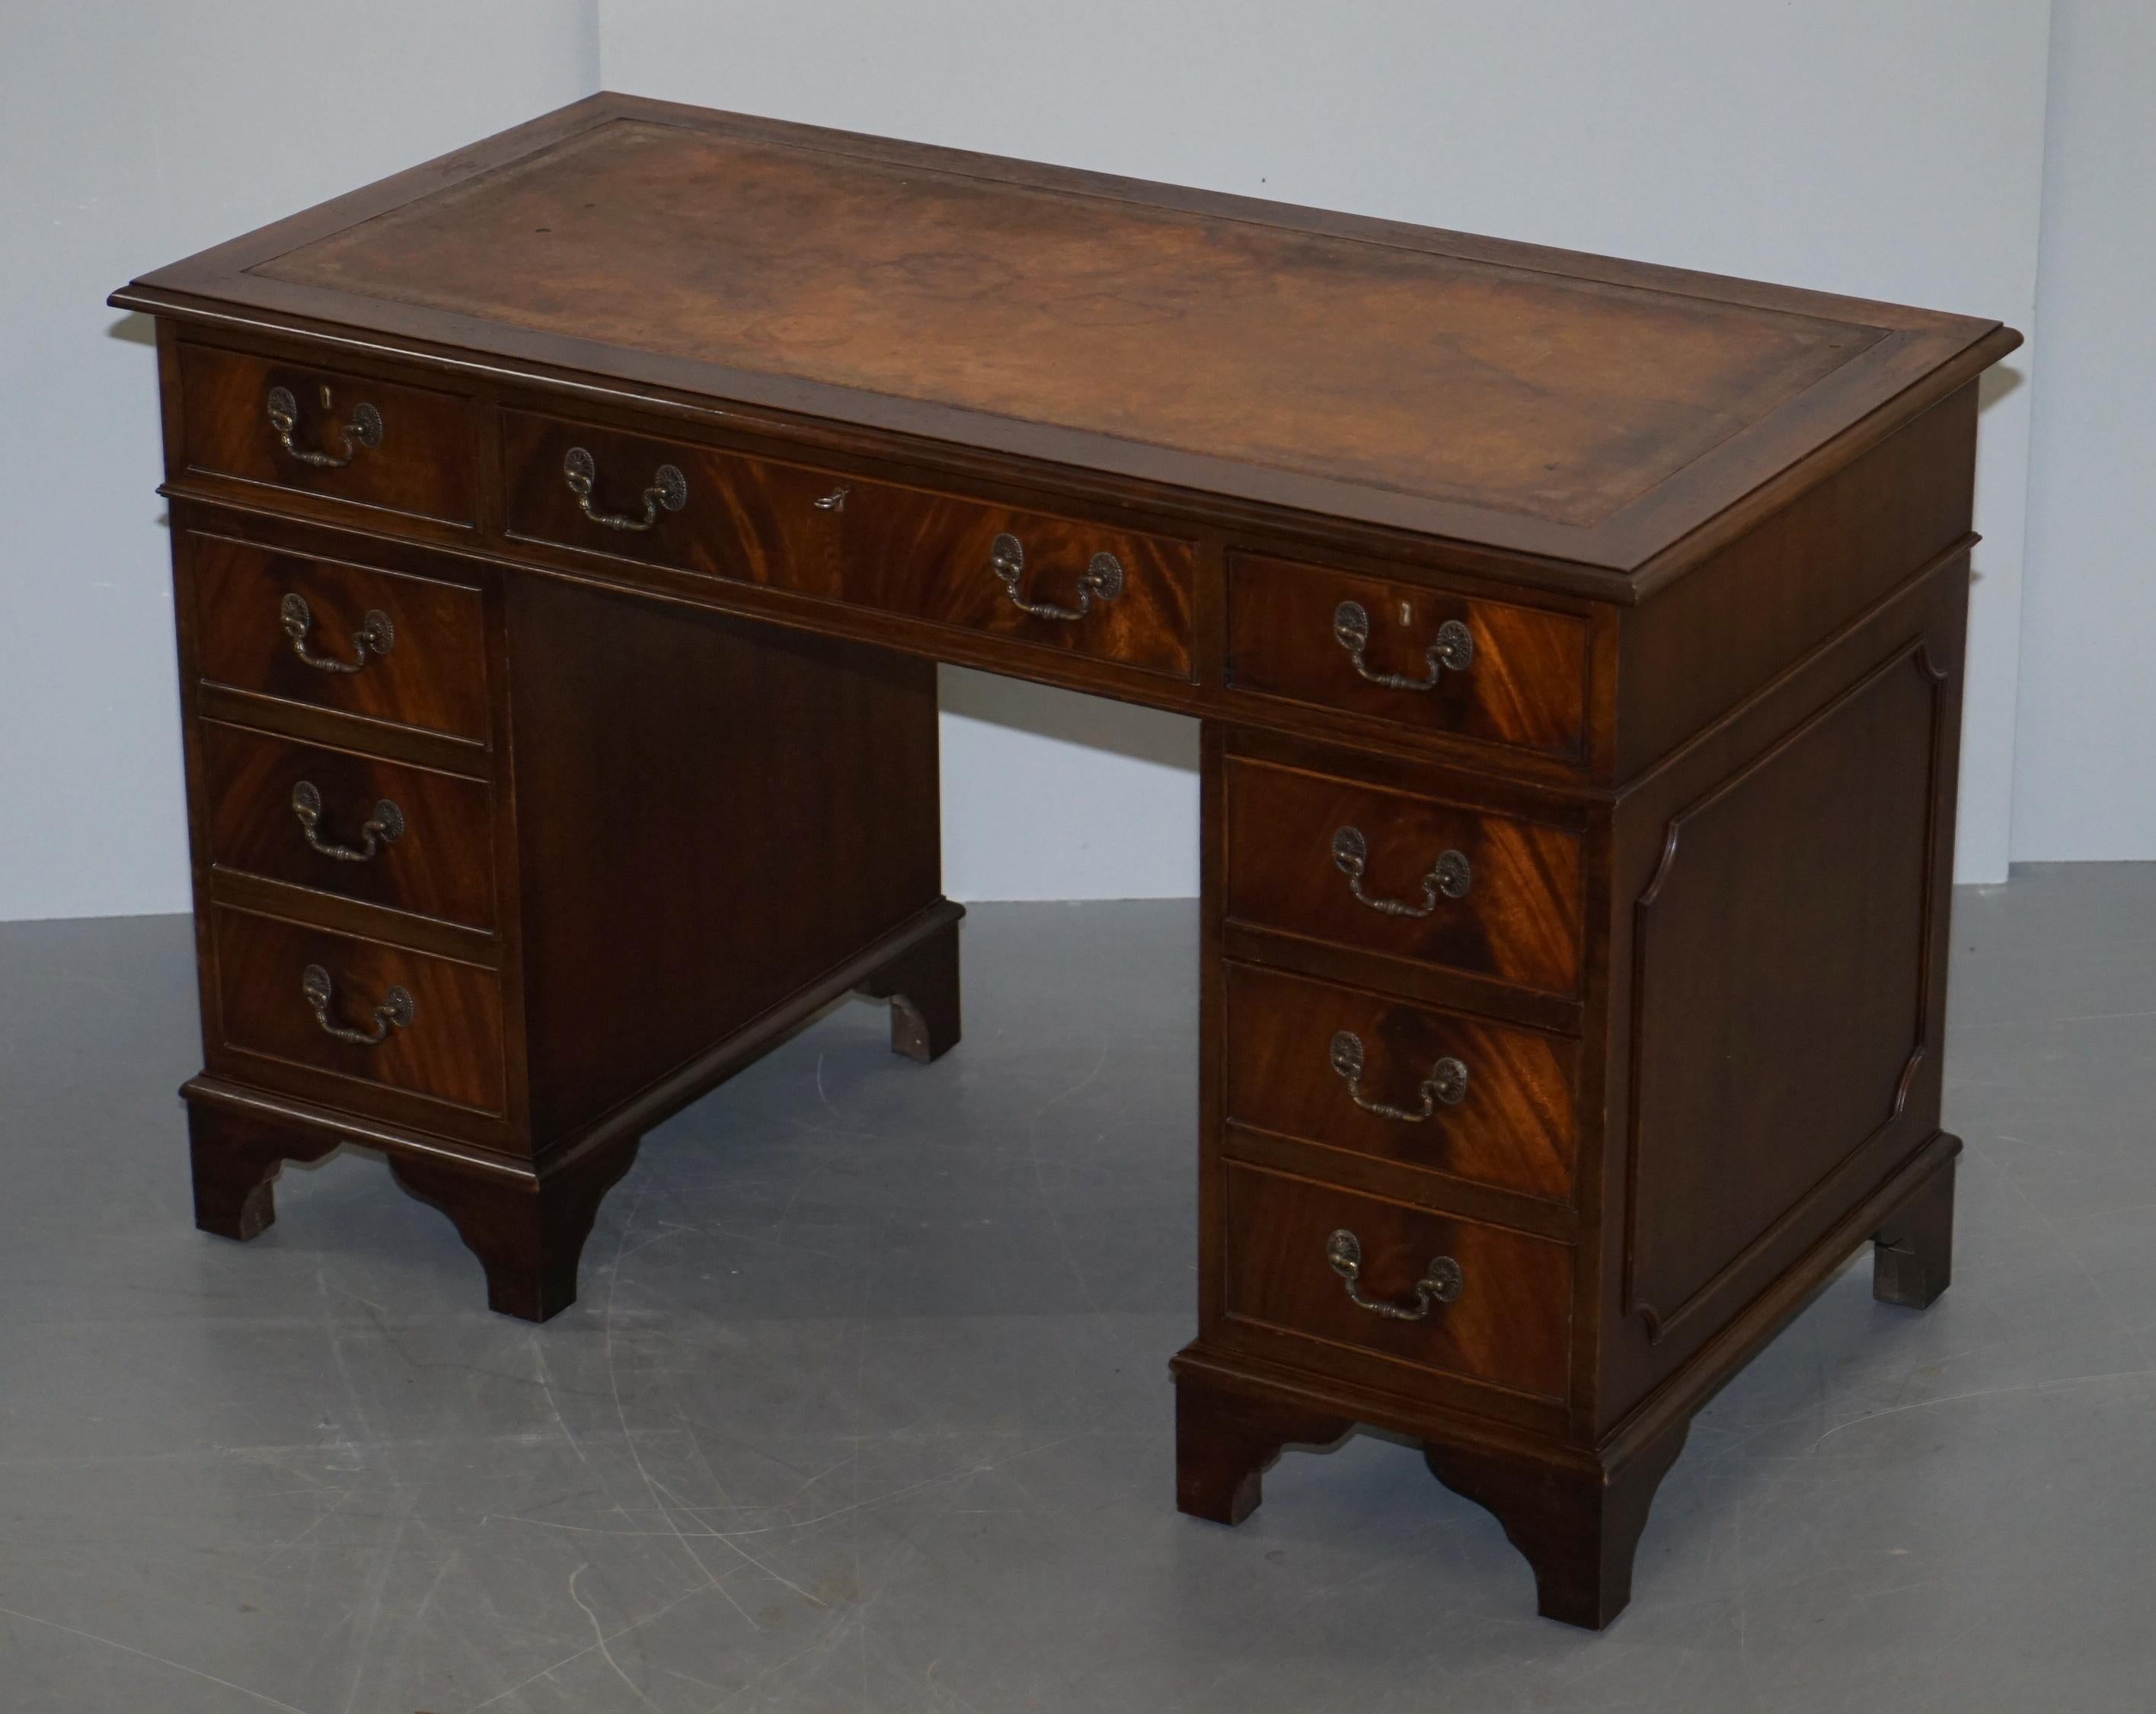 Victorian Vintage Hardwood Twin Pedestal Partner Desk With Distressed Brown Leather Top